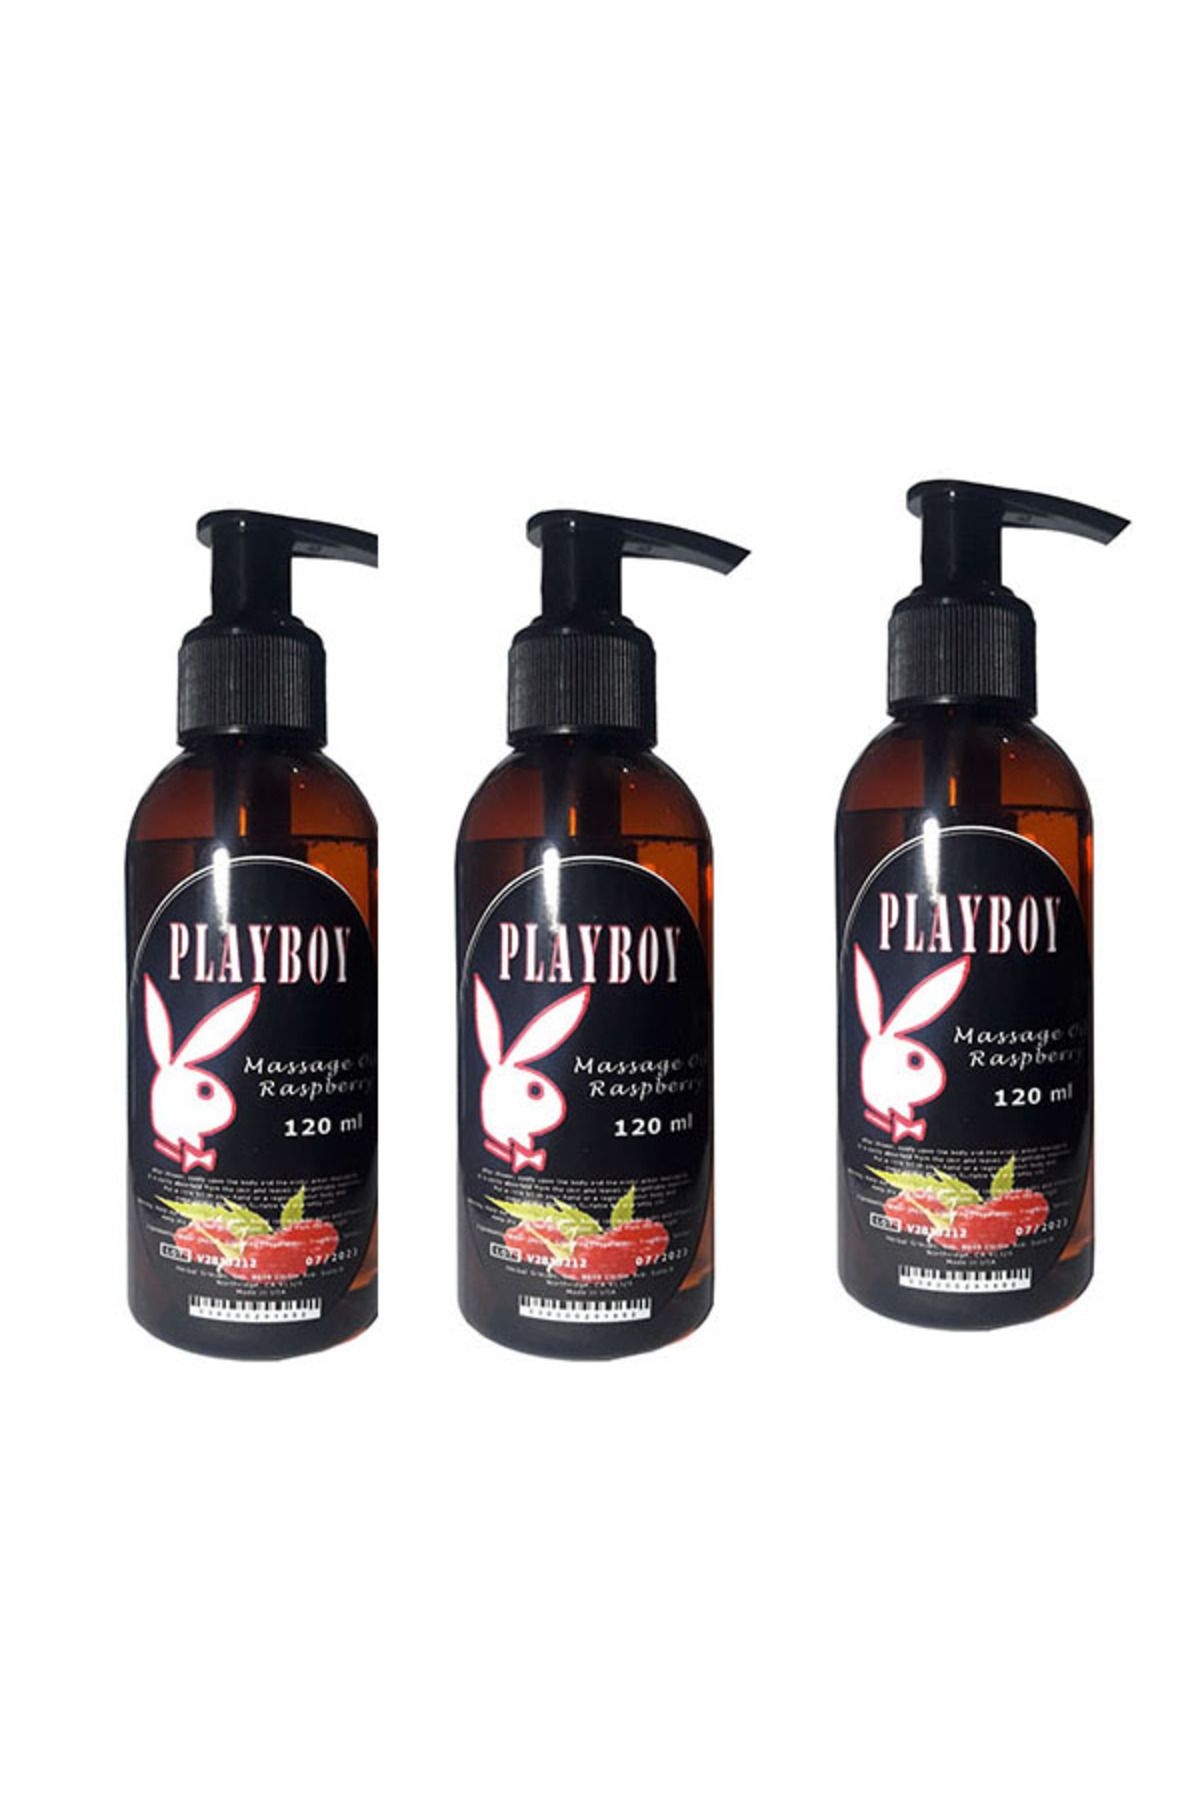 Playboy Ahududulu Masaj Yağı 120ml X 3 ad / Raspberry Flavored Massage Oil